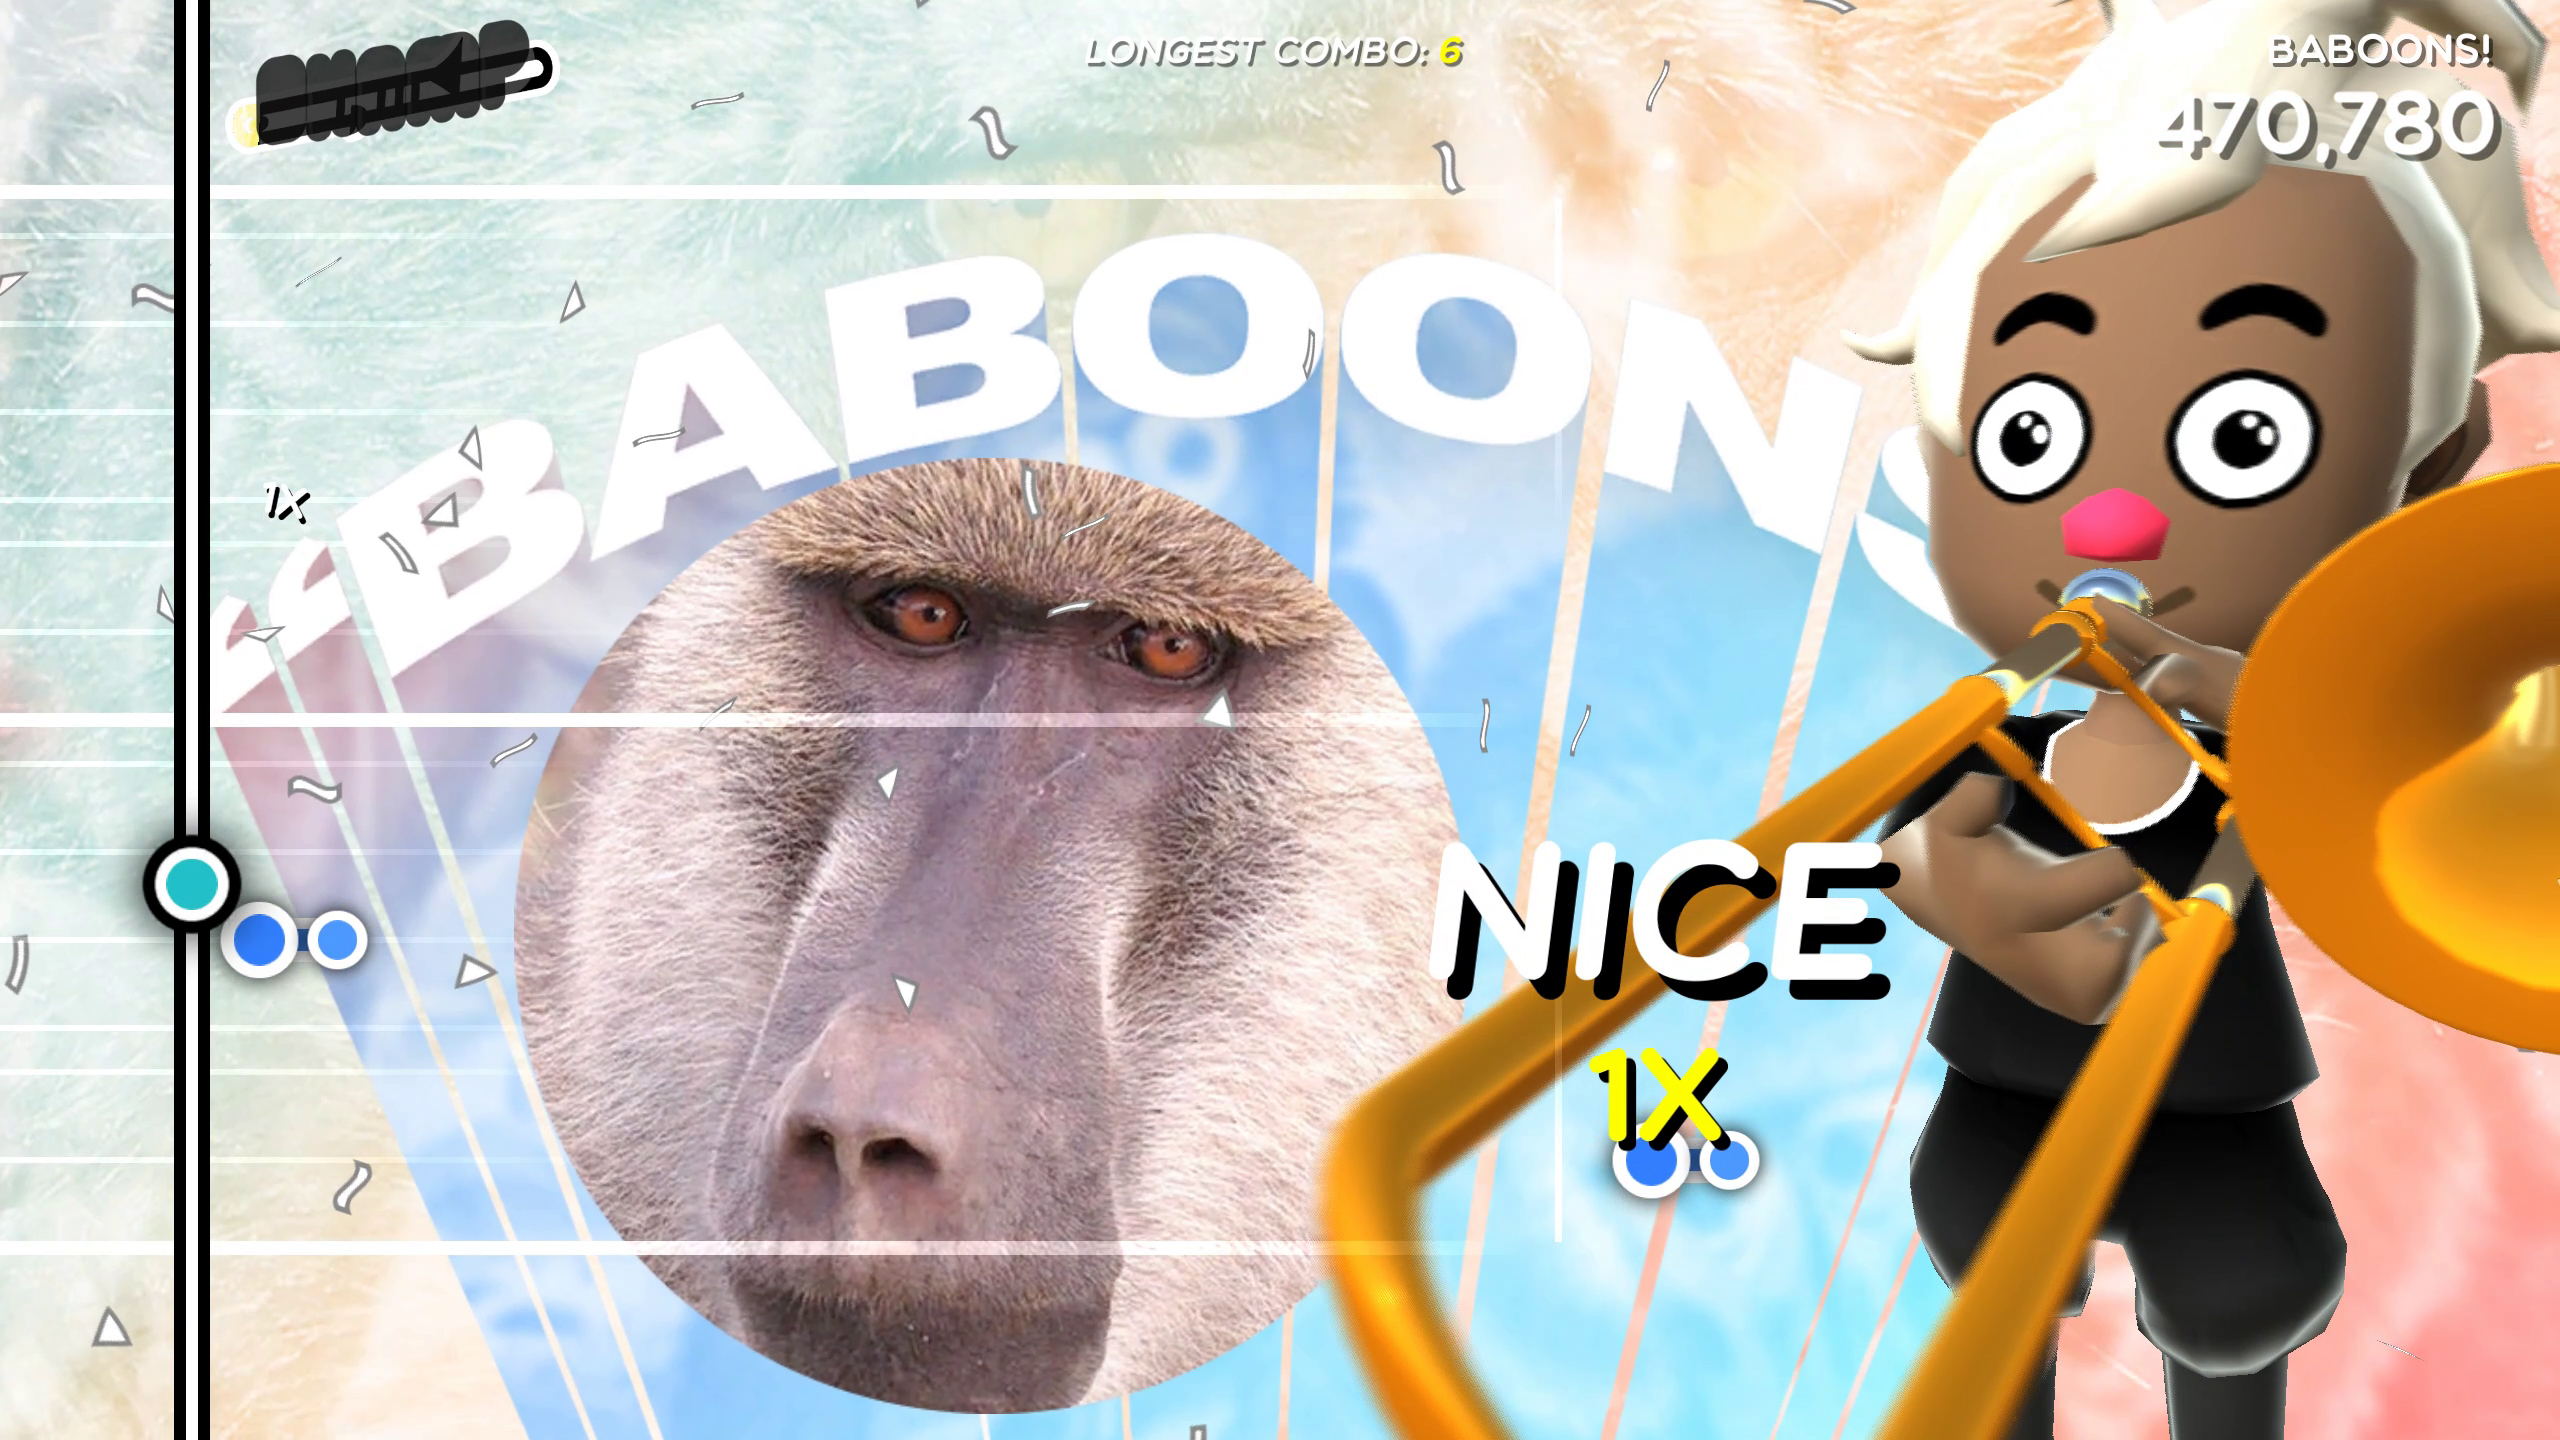  Trombone Champ creator sounds off about baboons, trombone traphouse, and Goku vs Vegeta 